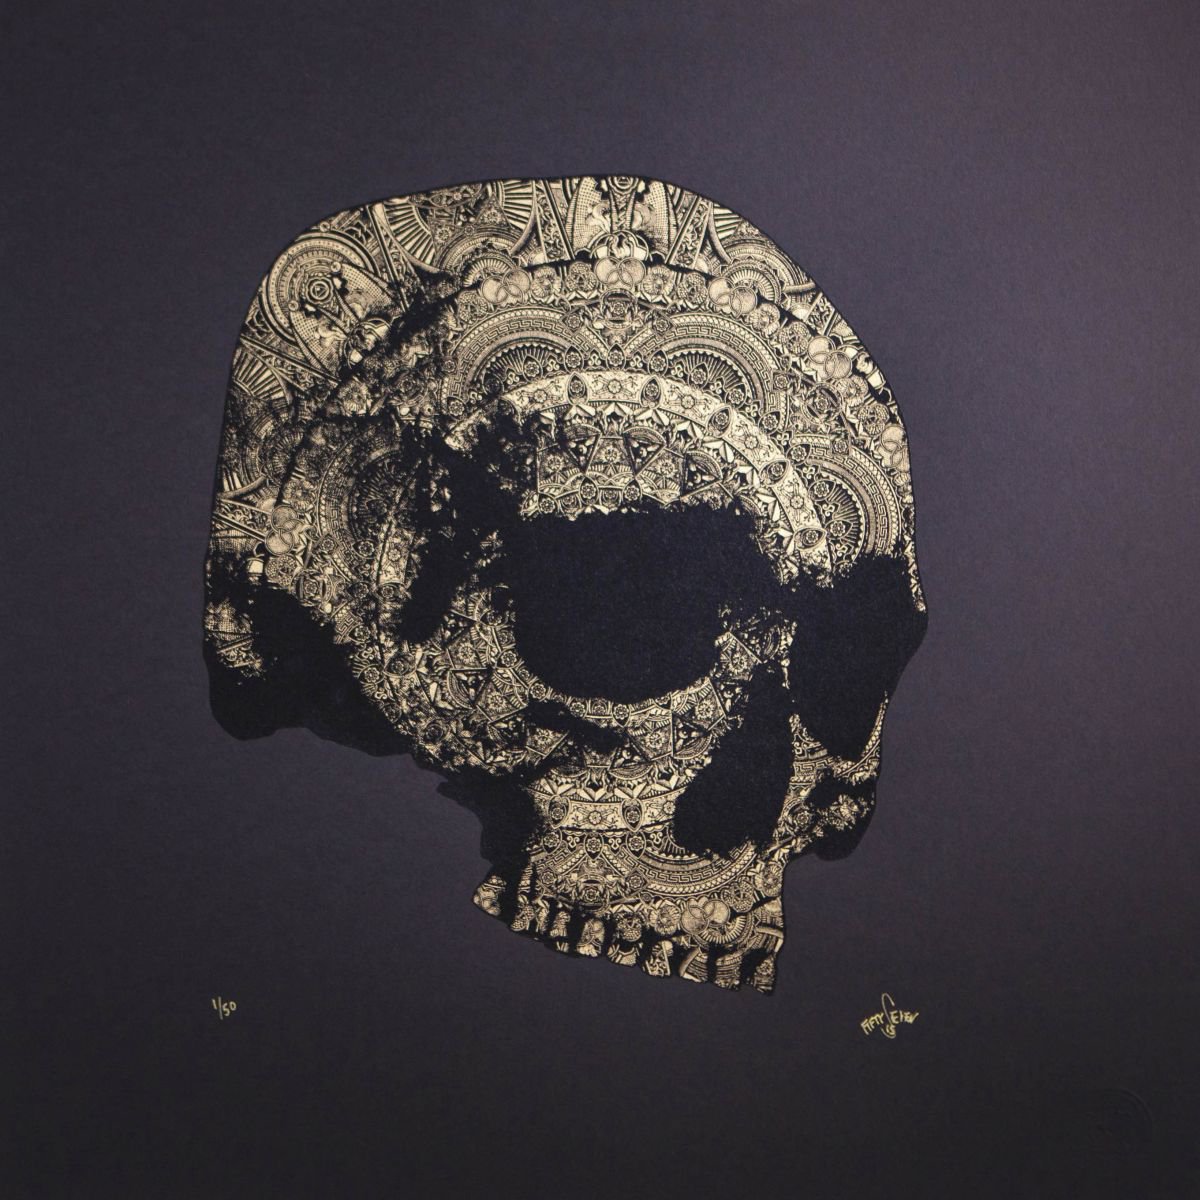 Skull: Version 2 by 57Design